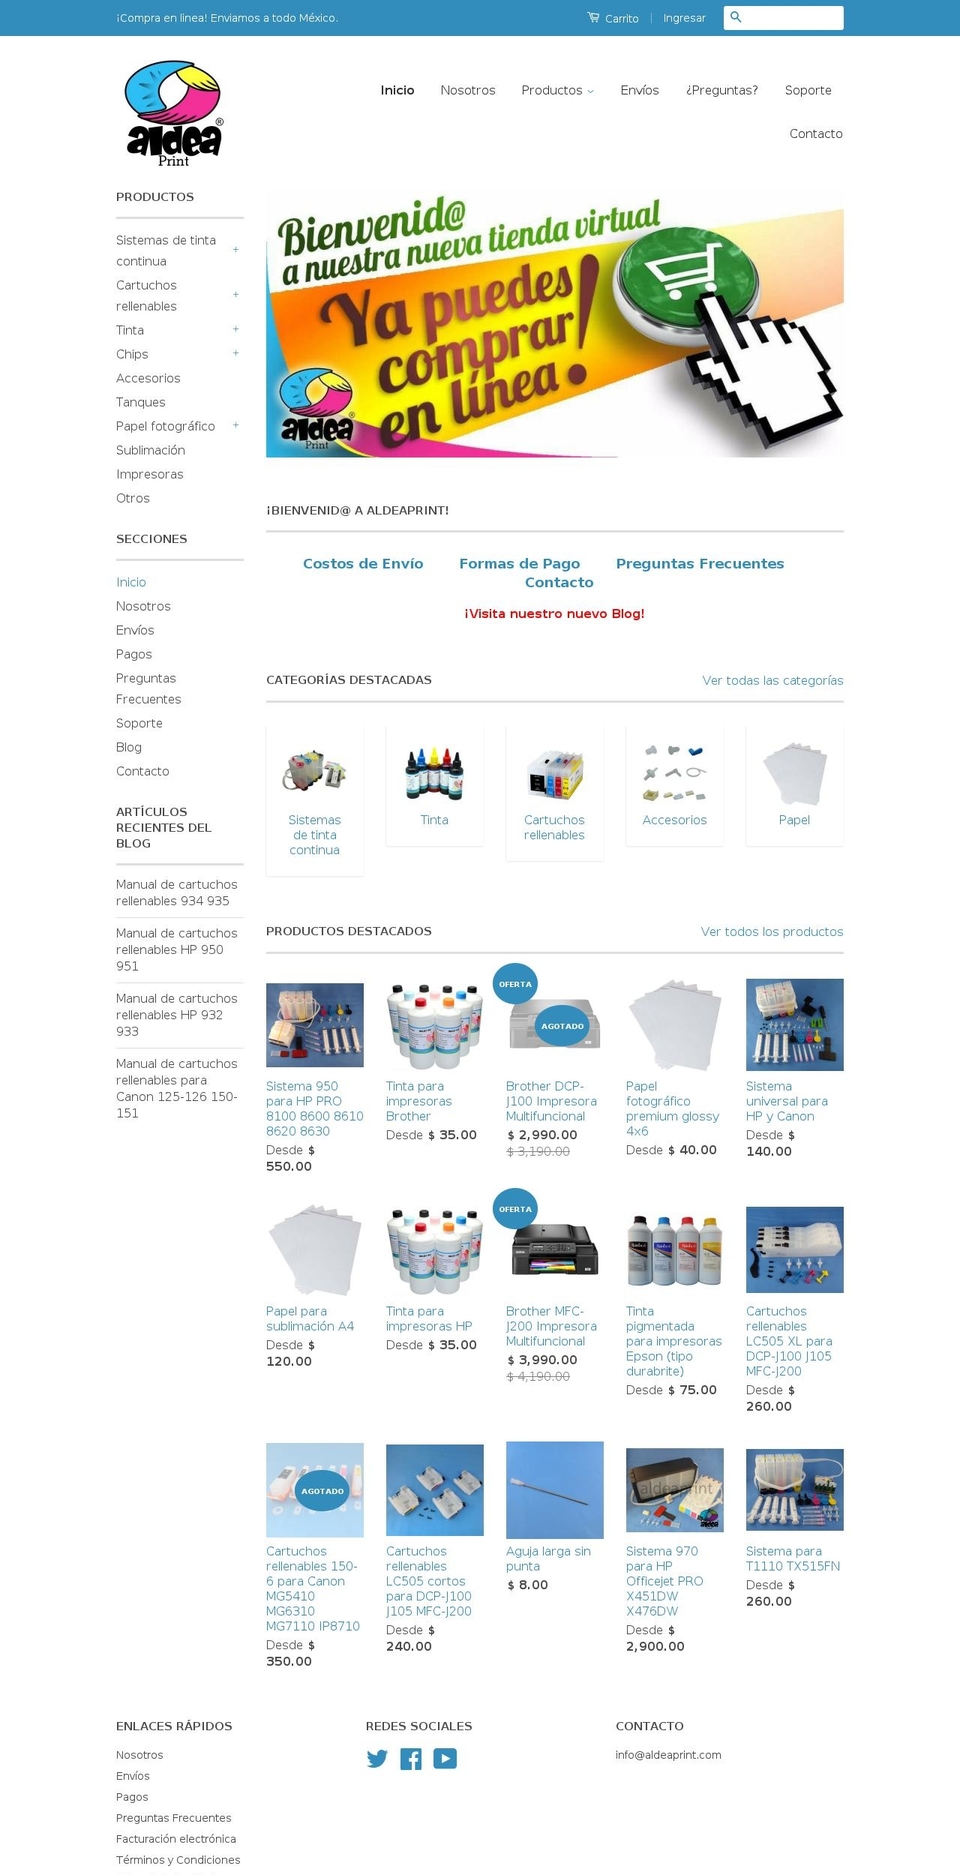 aldeaprint.com shopify website screenshot